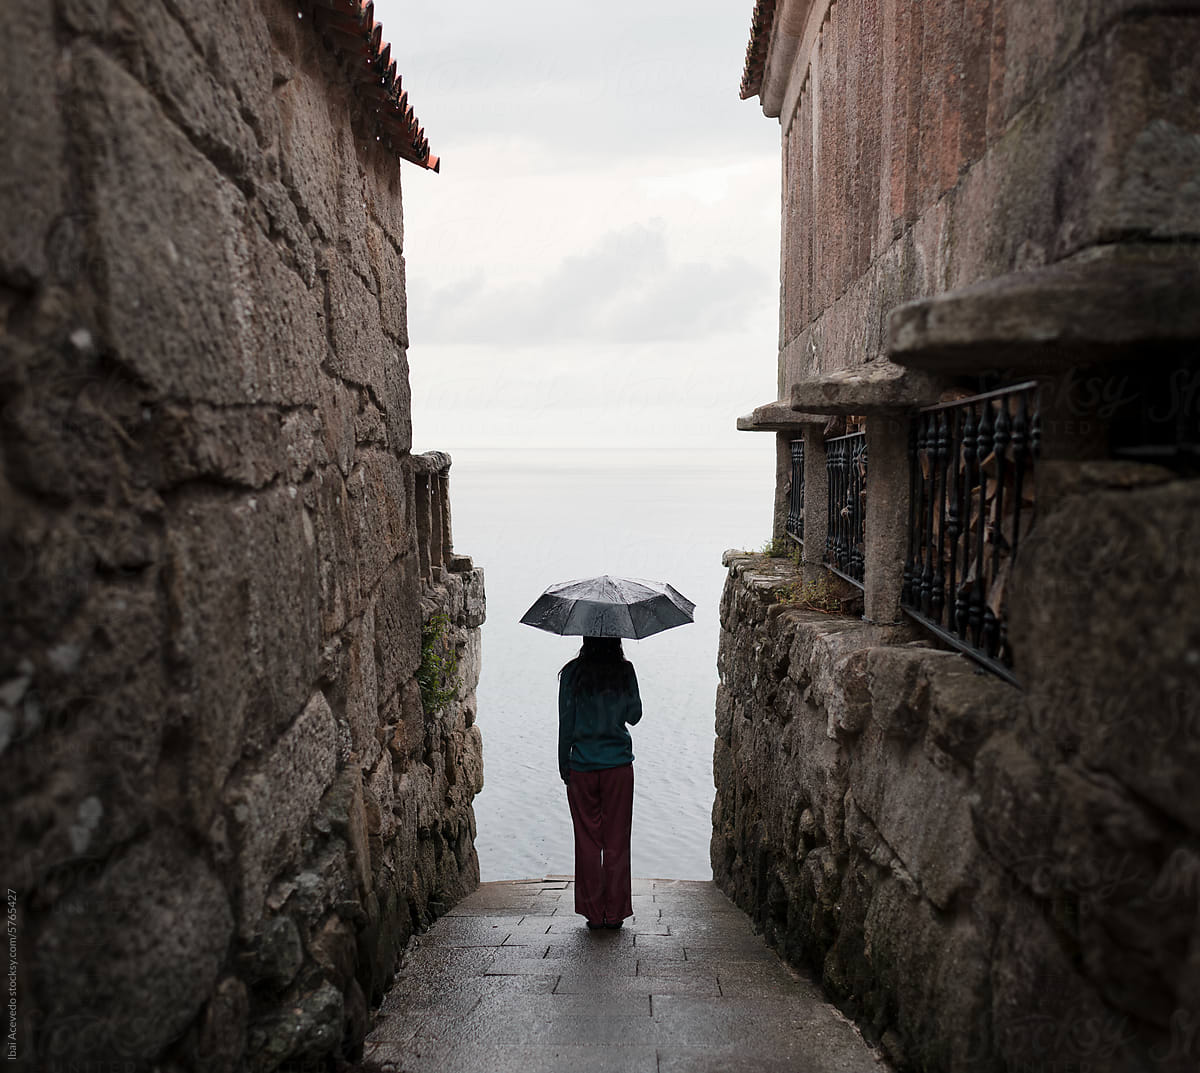 Woman with umbrella at surreal coast village street